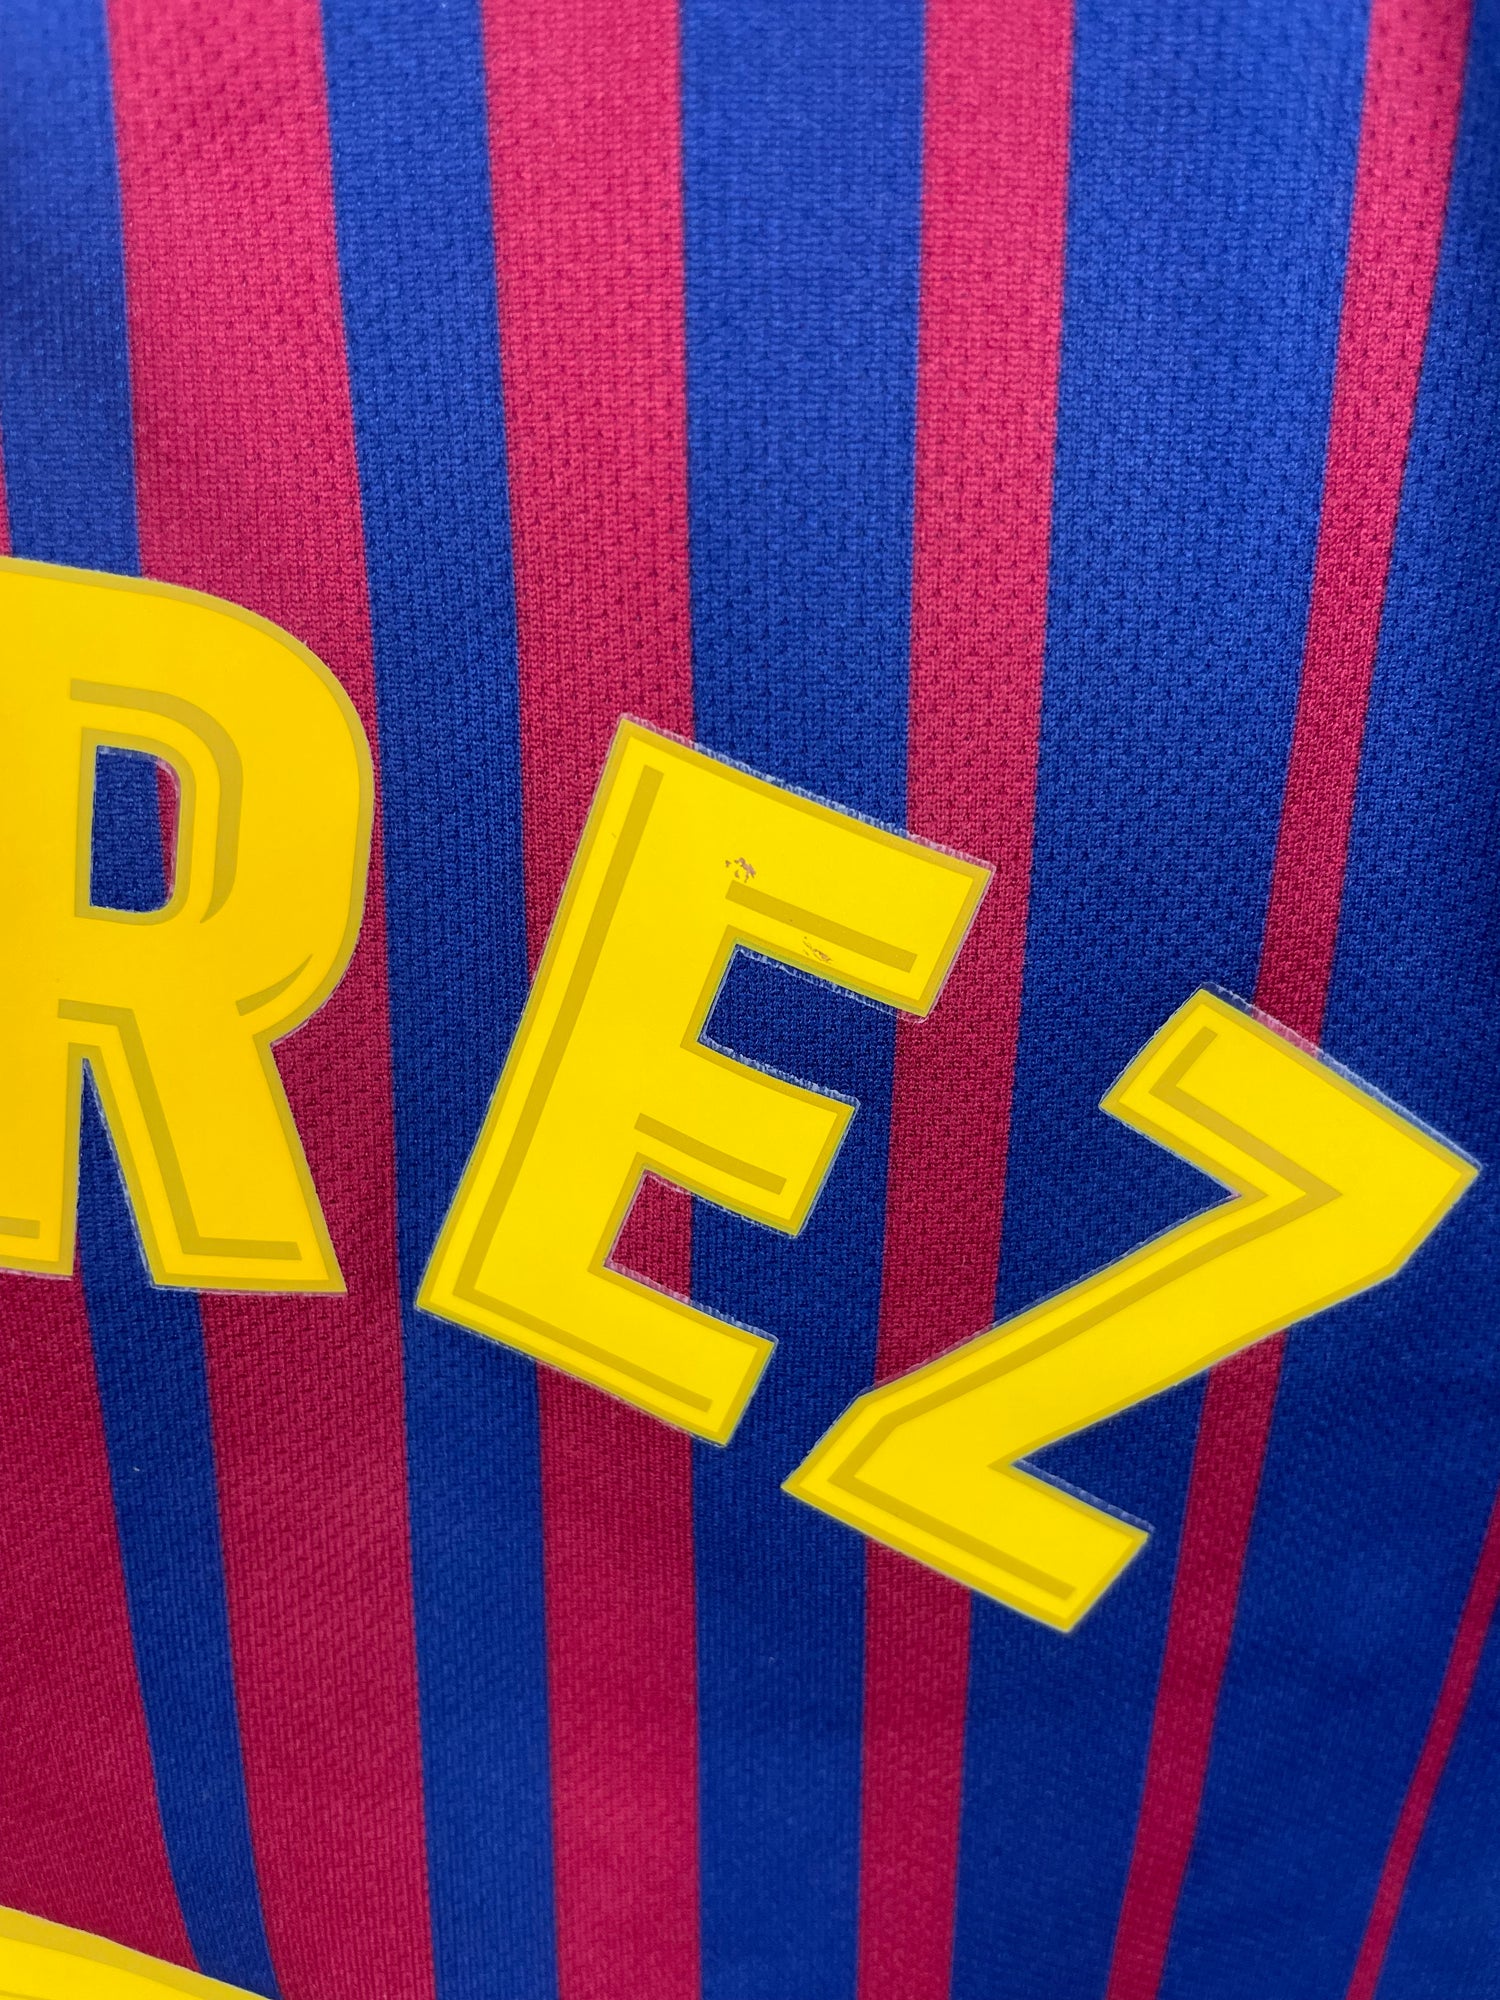 Luis Suarez Barcelona 17/18 hjemmebanetrøje - M